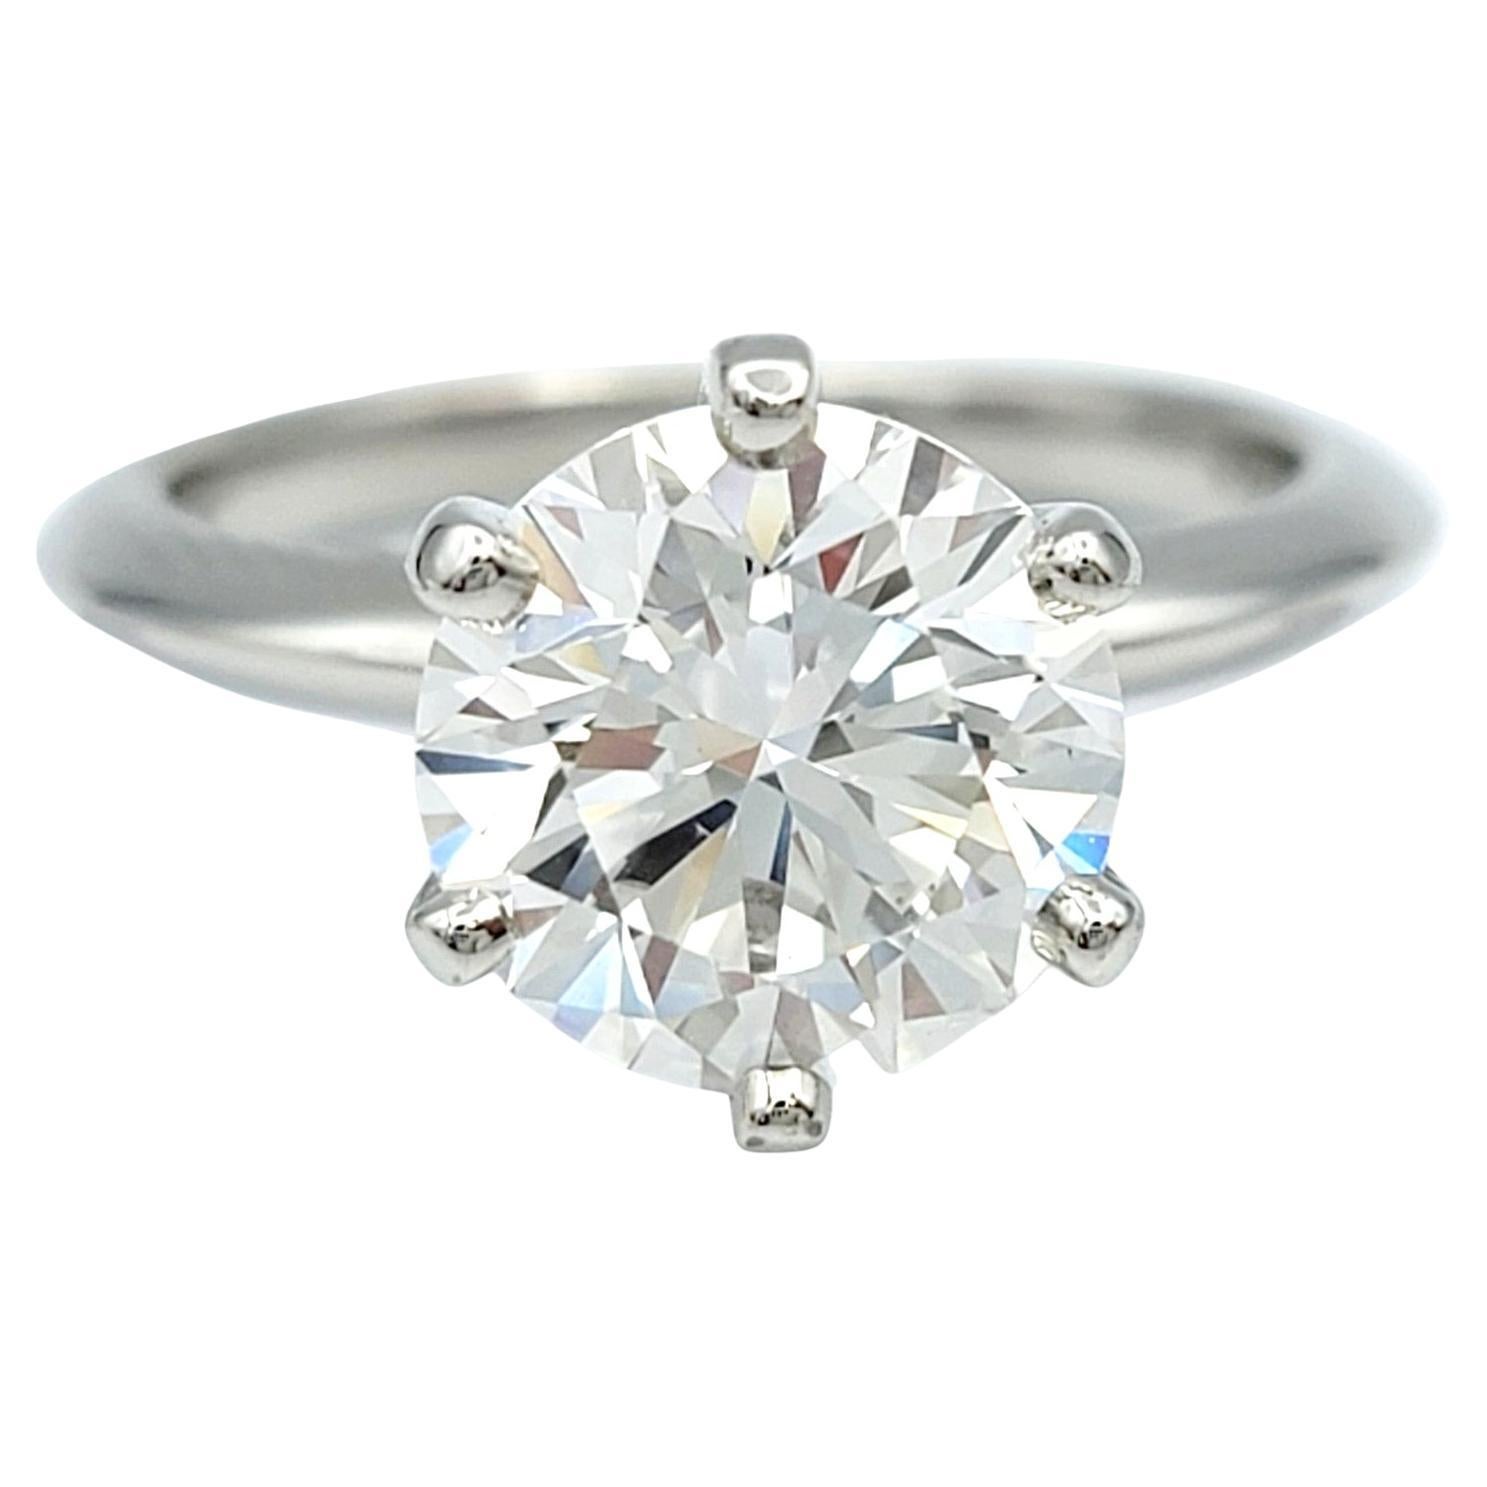 Tiffany & Co. Verlobungsring mit 2,29 Karat rundem Diamant Solitär mit 6 Zacken, F/VS1 